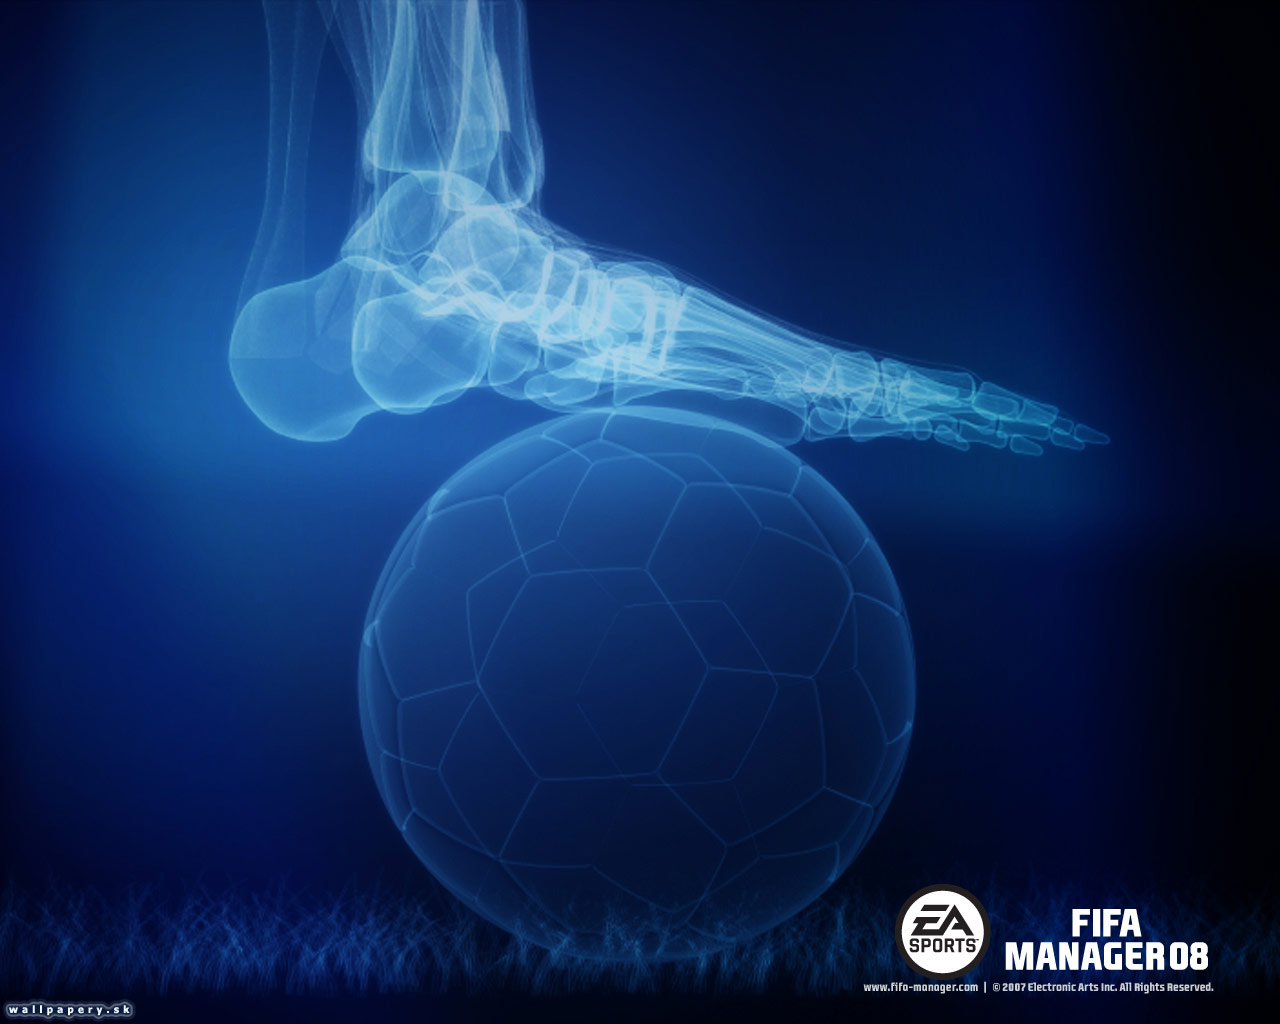 FIFA Manager 08 - wallpaper 3